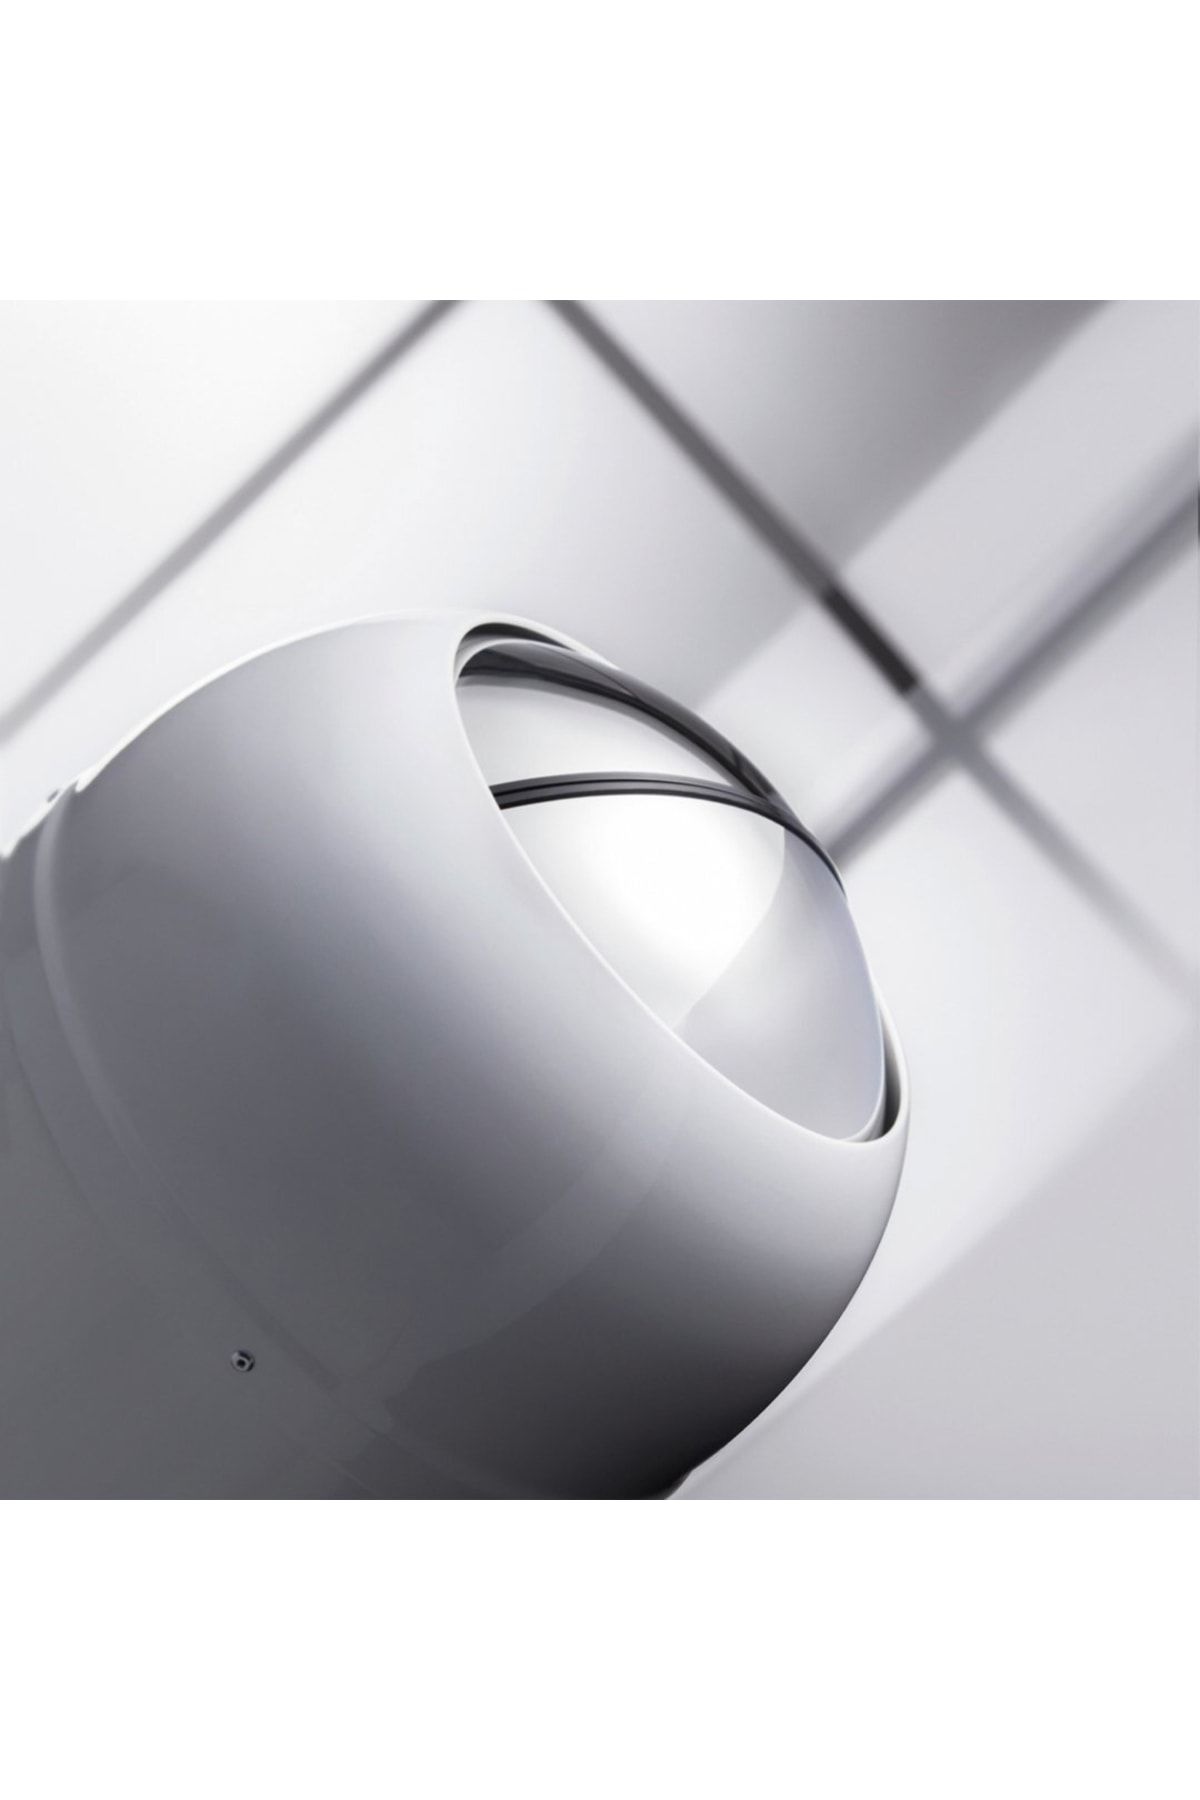 Paslanmaz Çelik-Mini Usta 6  Litre Banyo Çöp Kutusu (264x360mm)